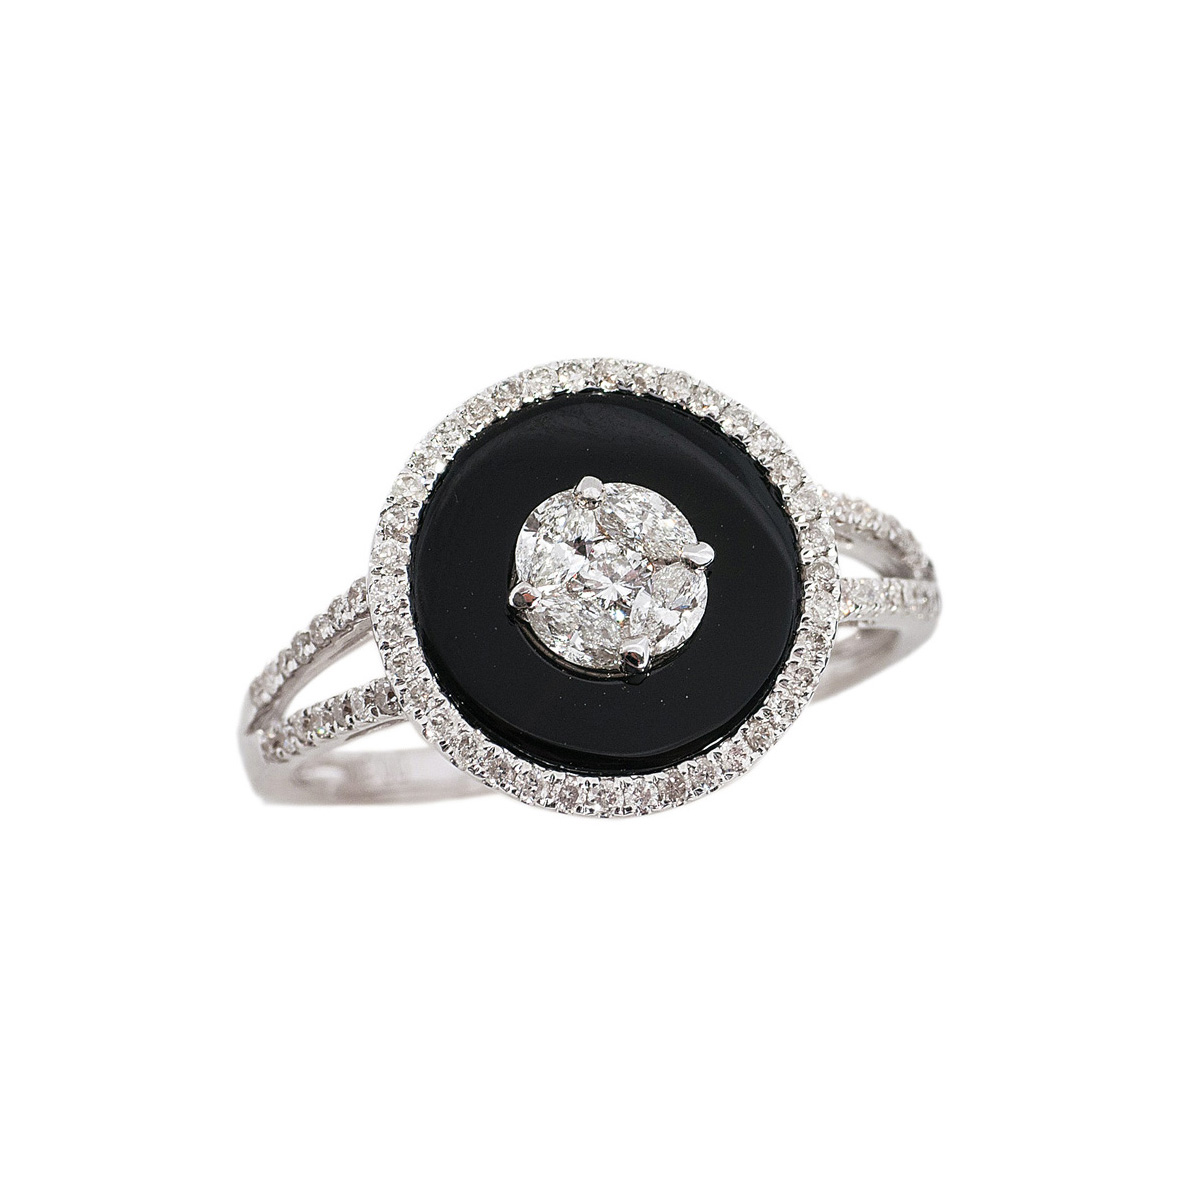 A diamond onyx ring